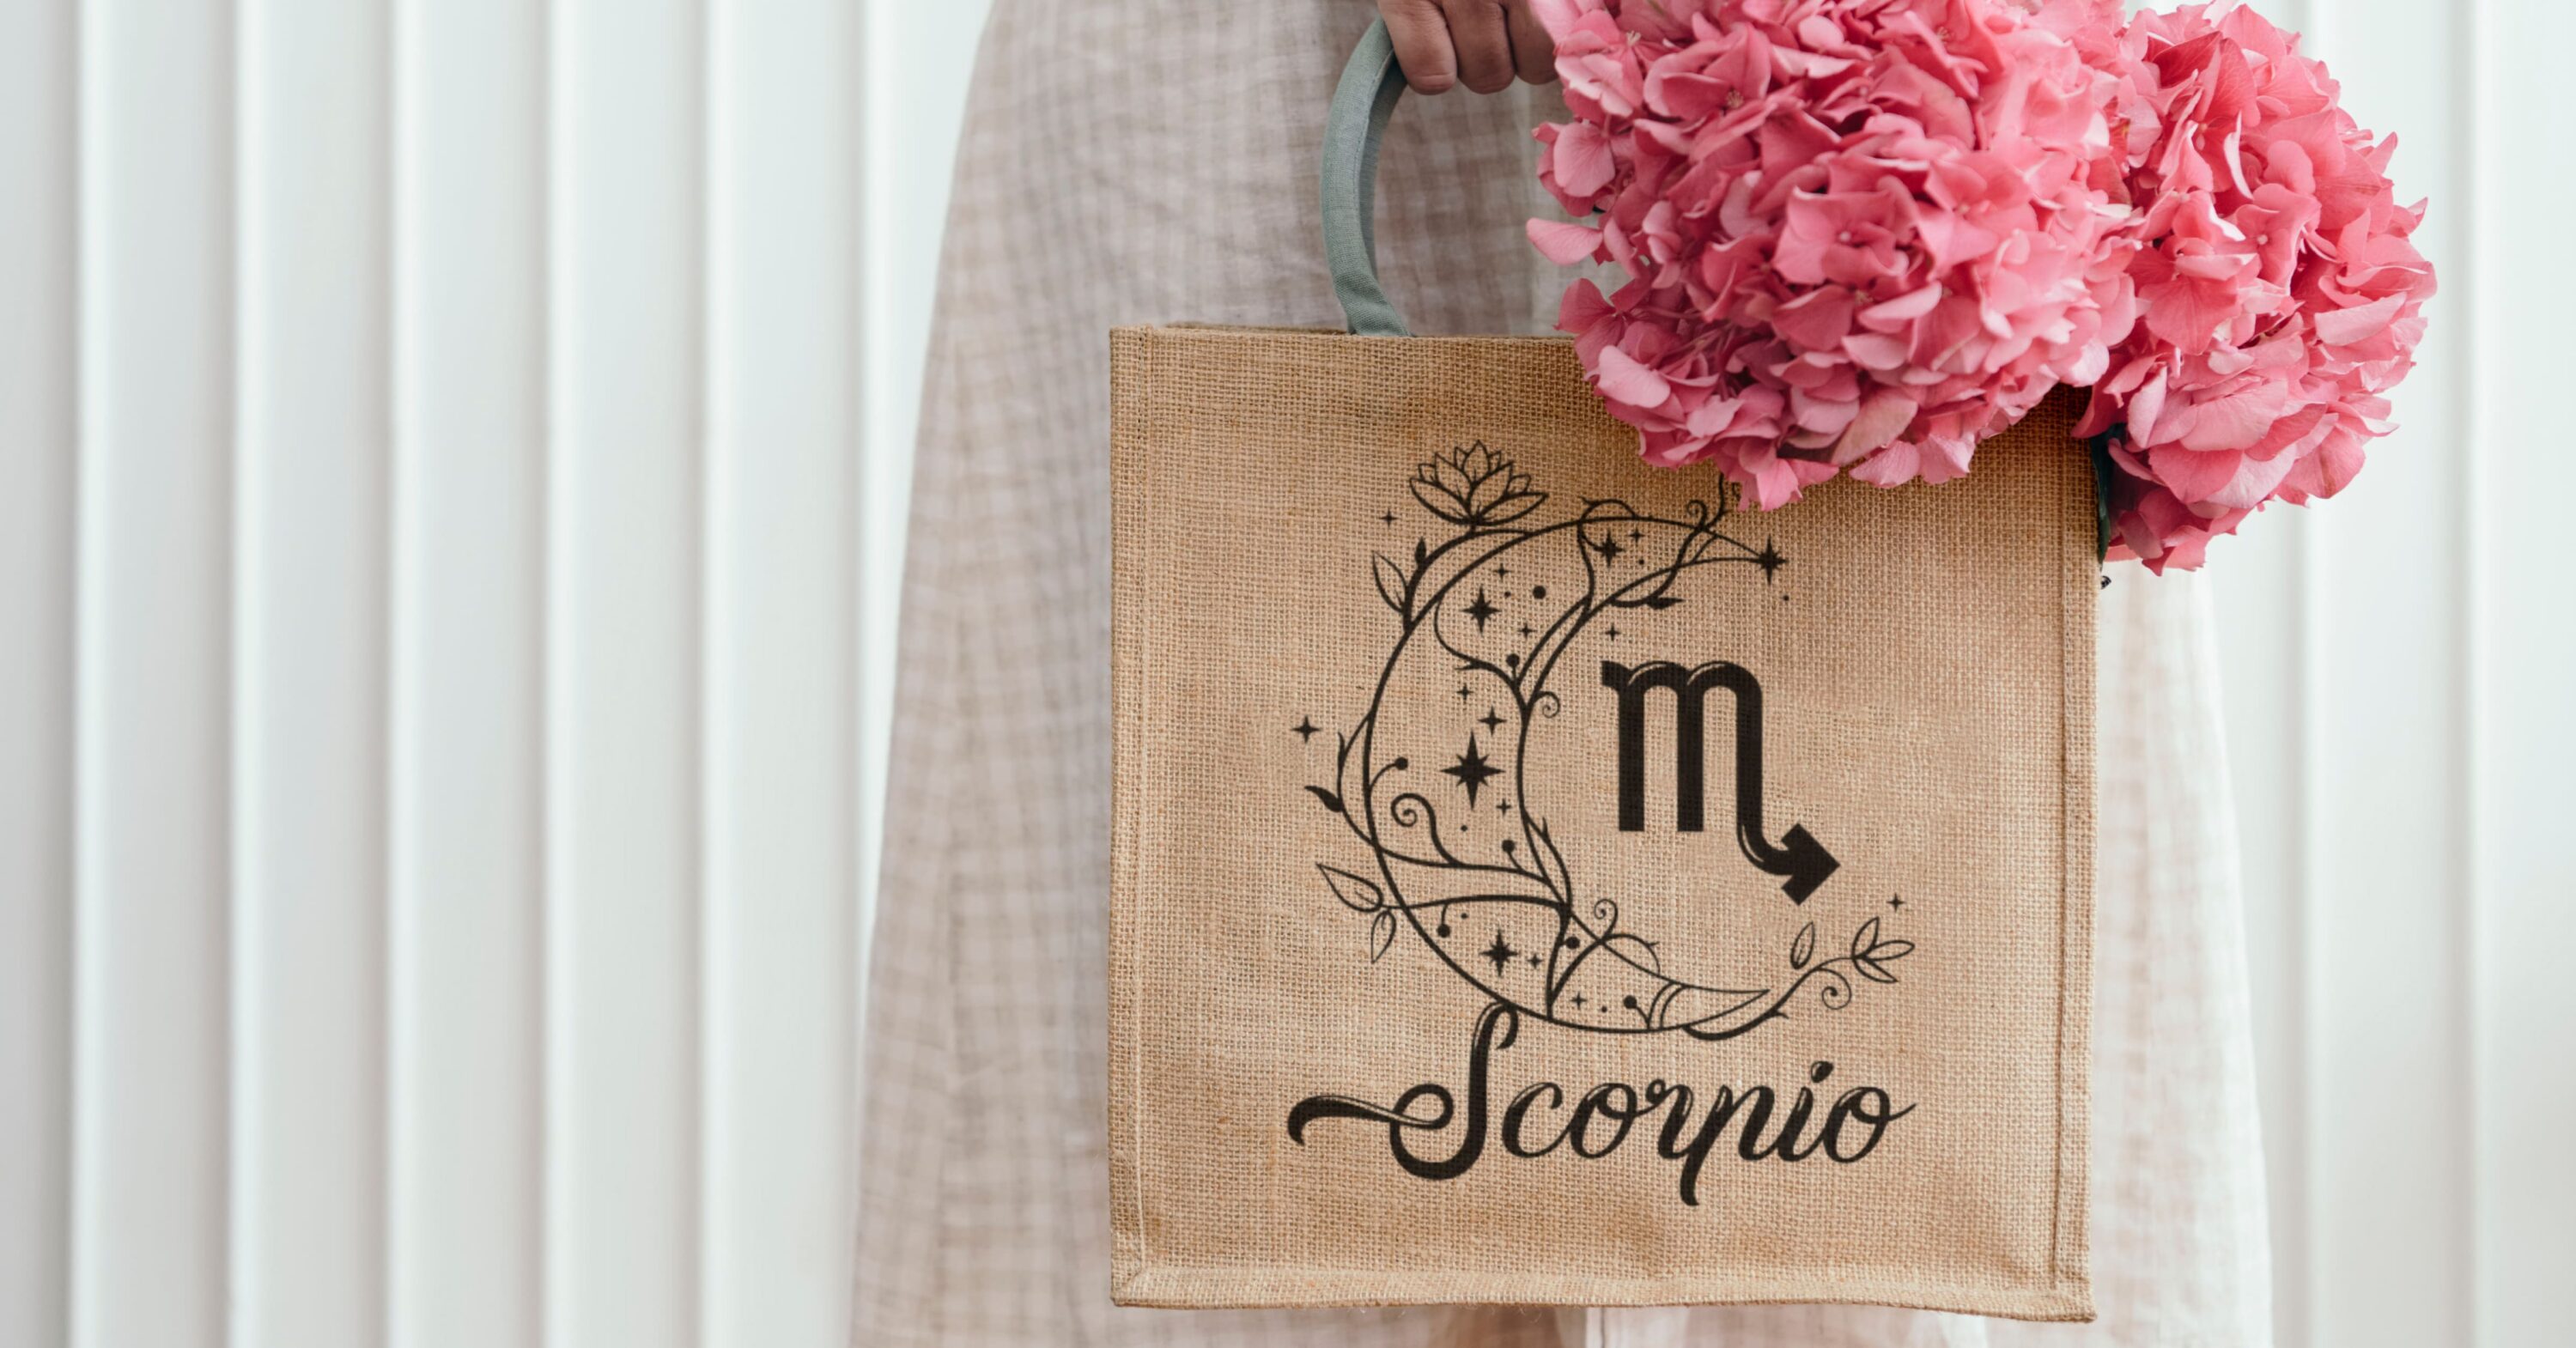 Scorpio Zodiac for a bag.